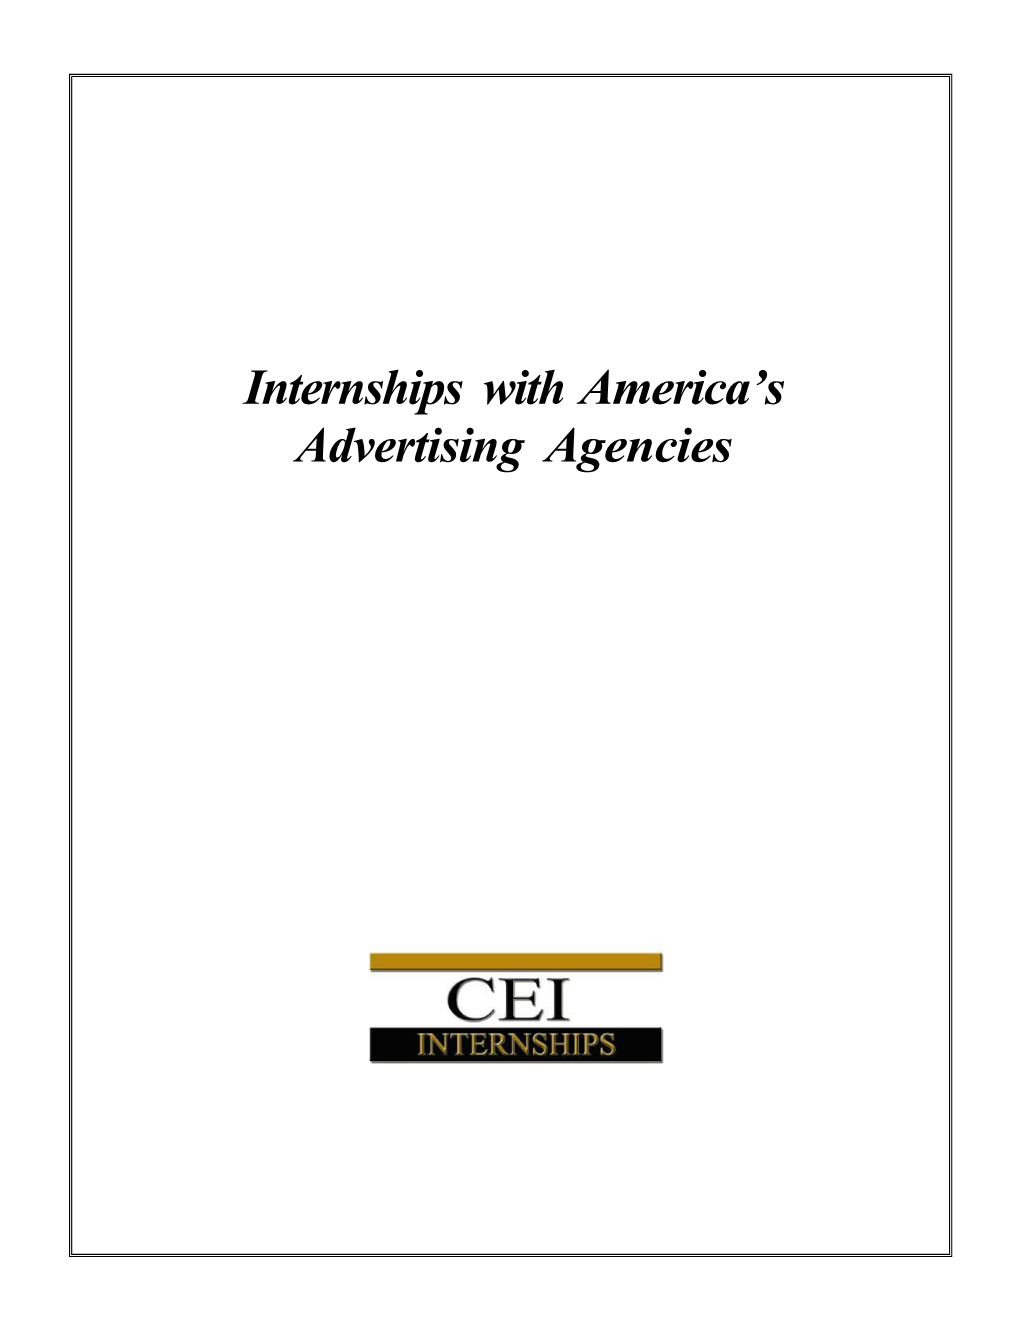 Internships with America's Advertising Agencies